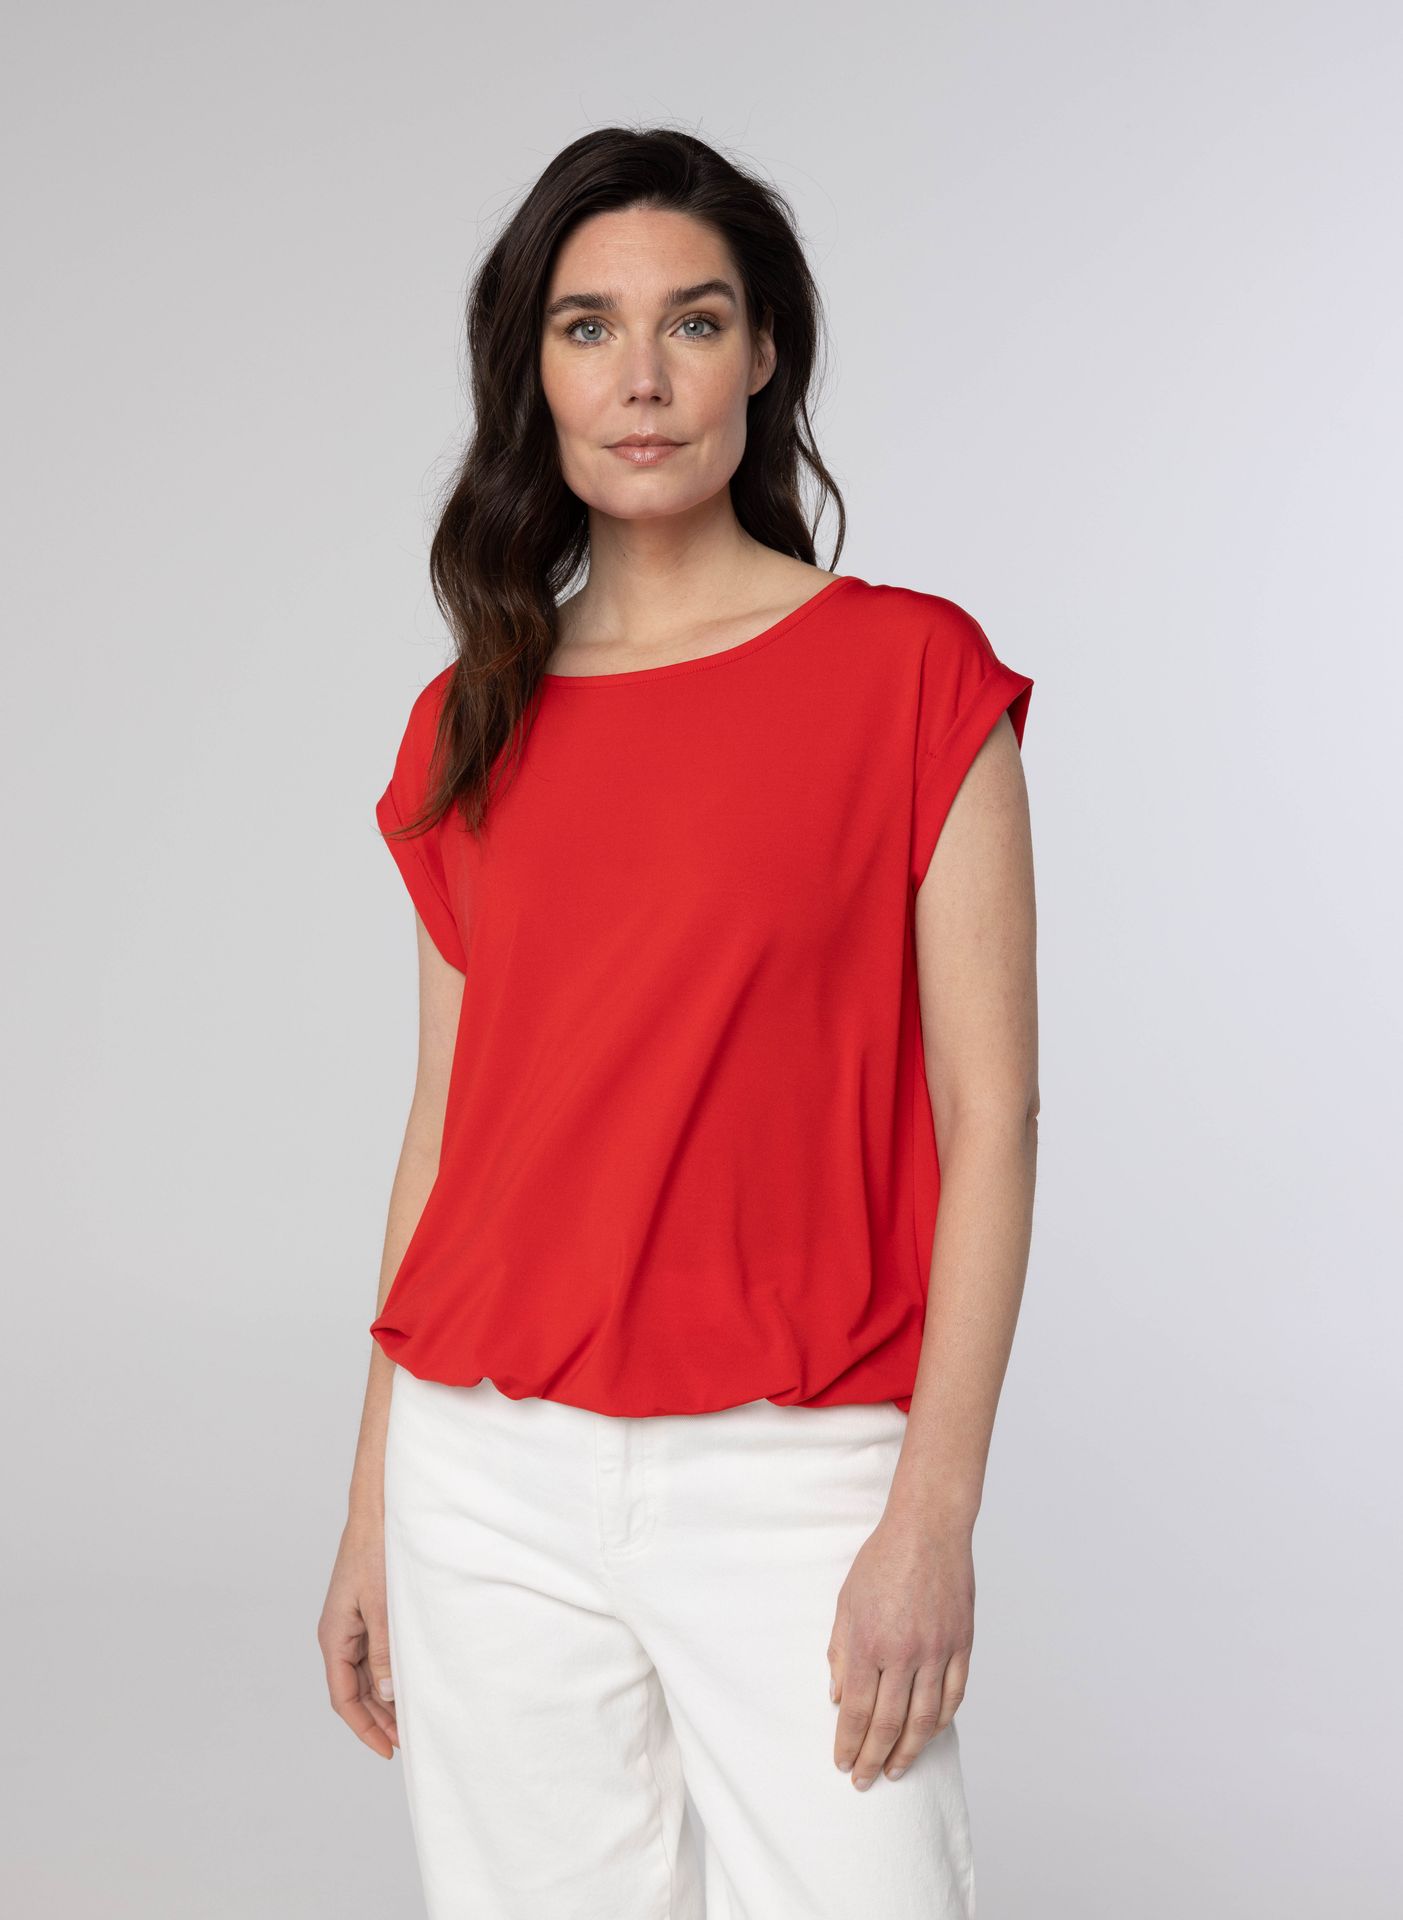 Norah Rood shirt red 210284-600